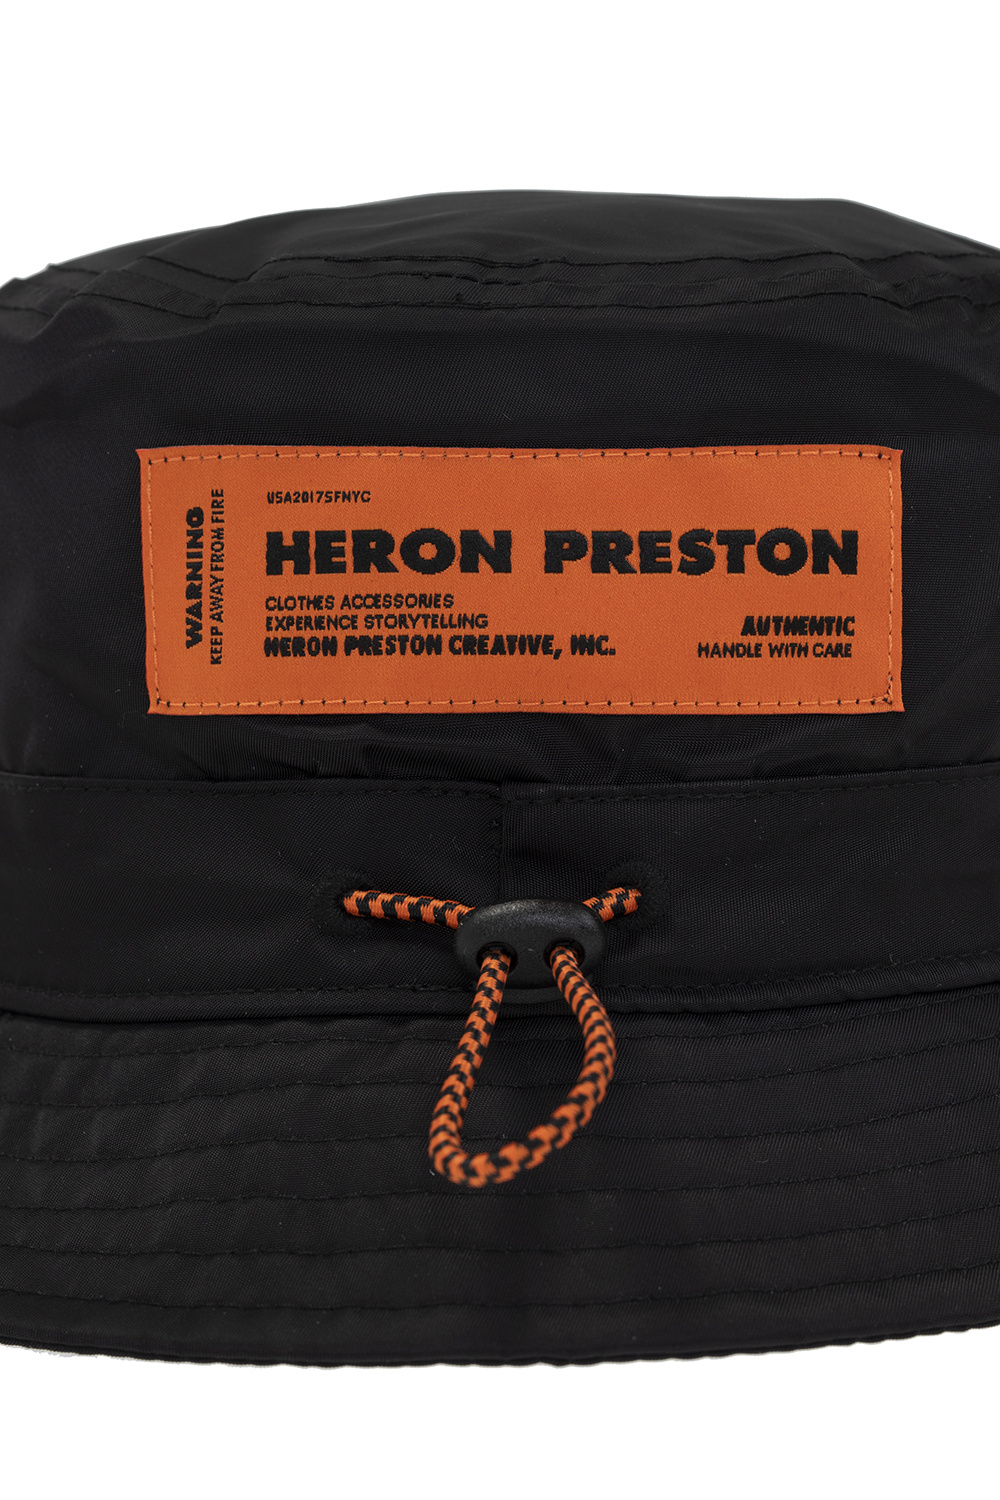 IetpShops US - patch hat Heron Preston - Logo - 2015 new nike air 